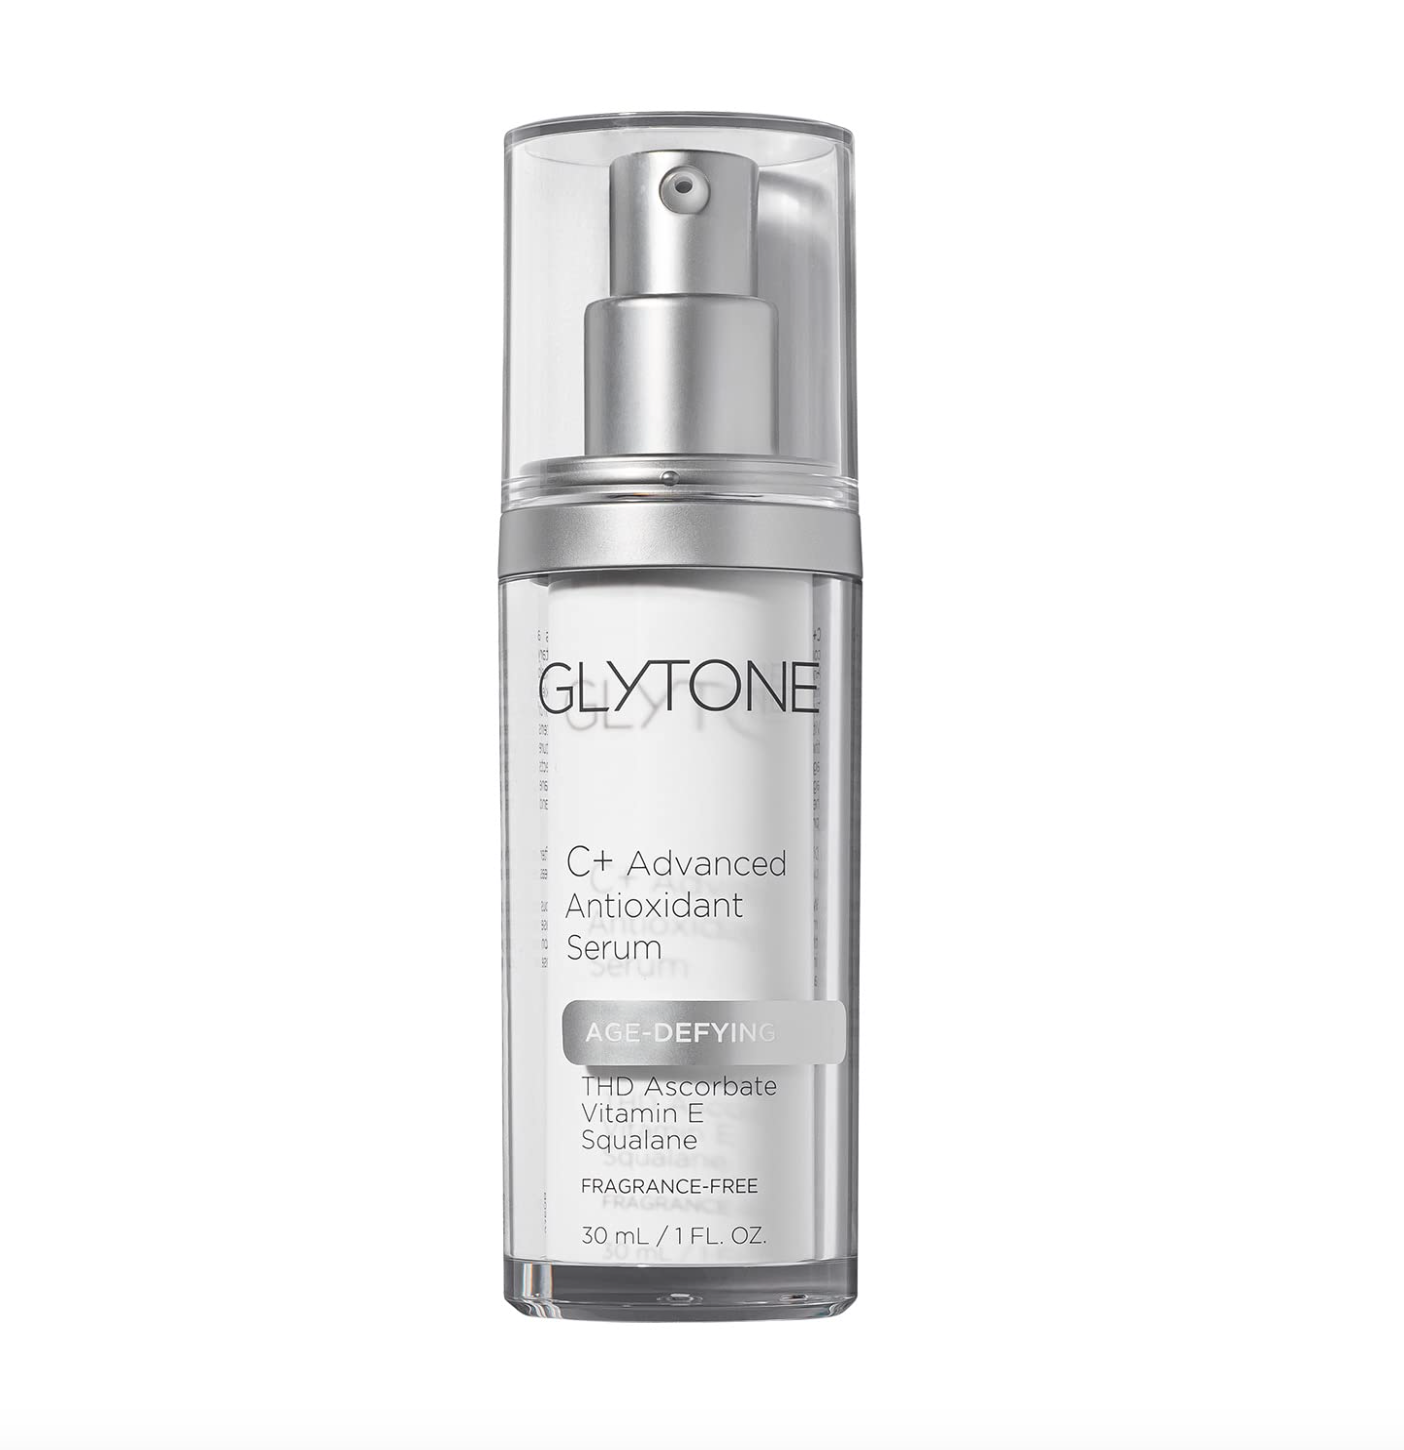 Glytone C + Advanced Antioxidant Serum